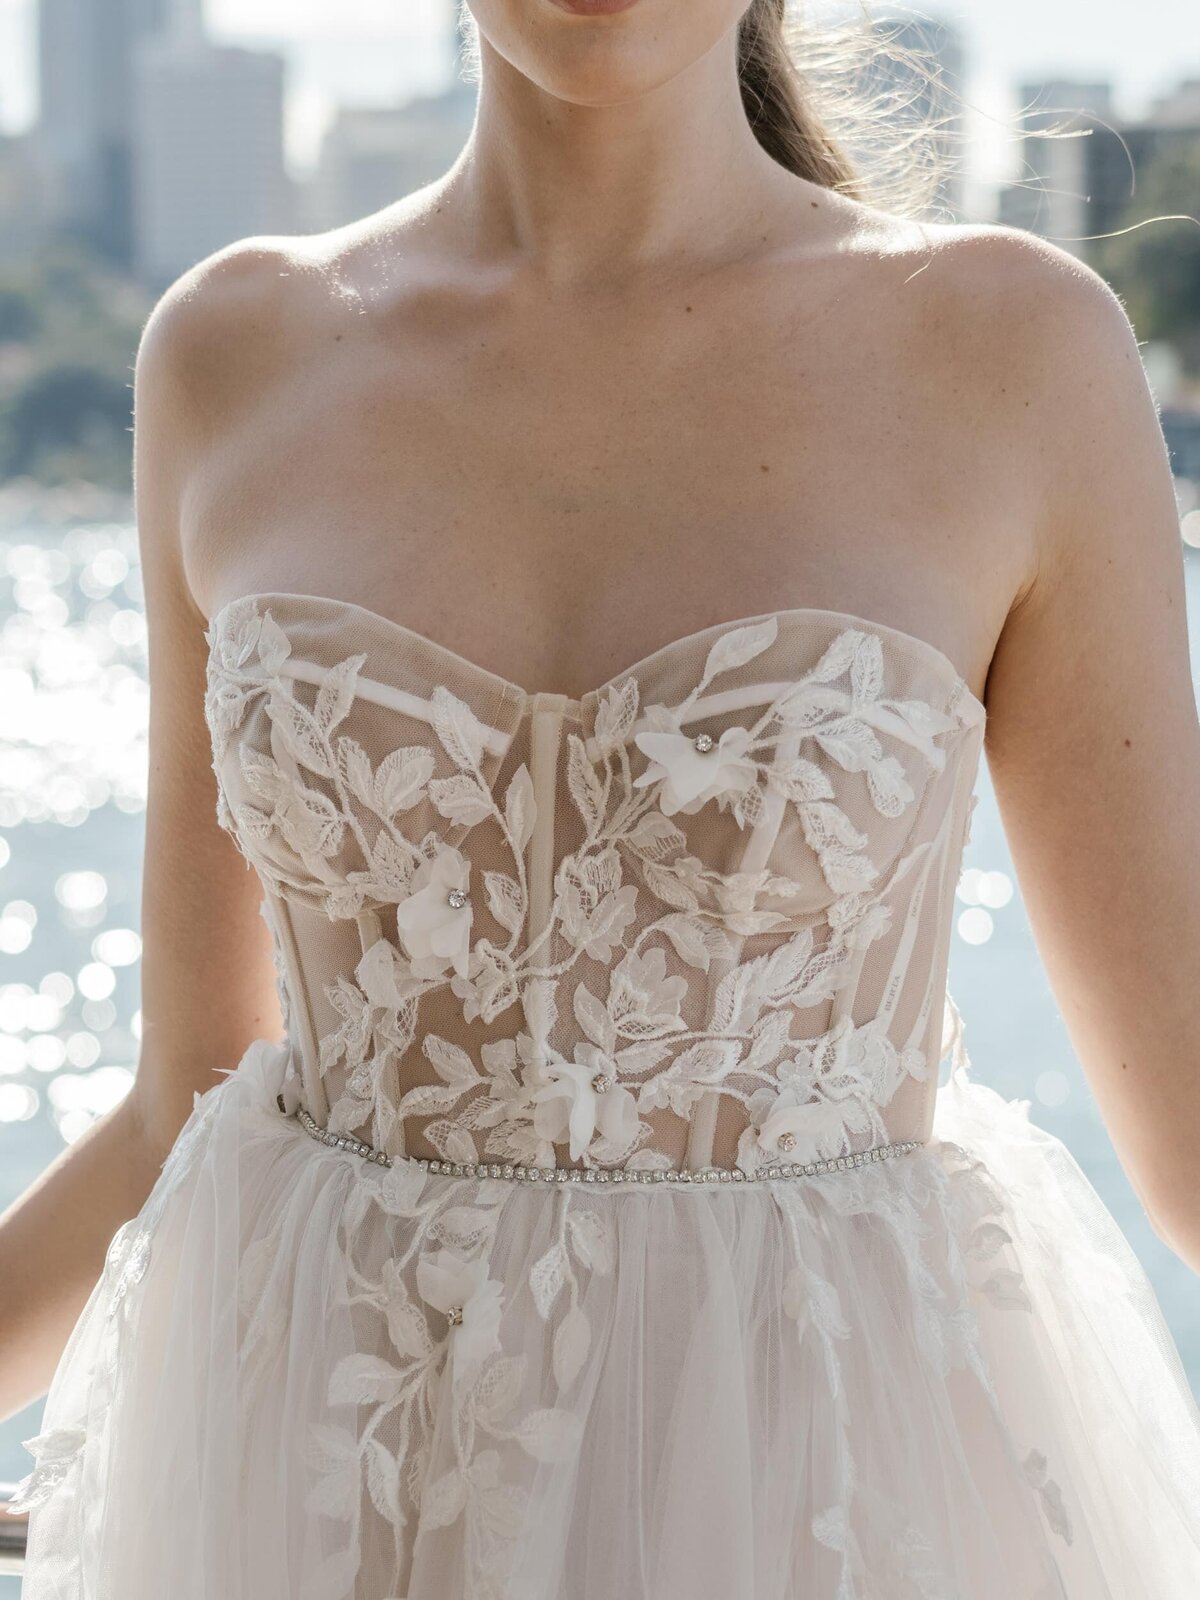 Muse by Berta wedding dress - Serenity Photography - 177